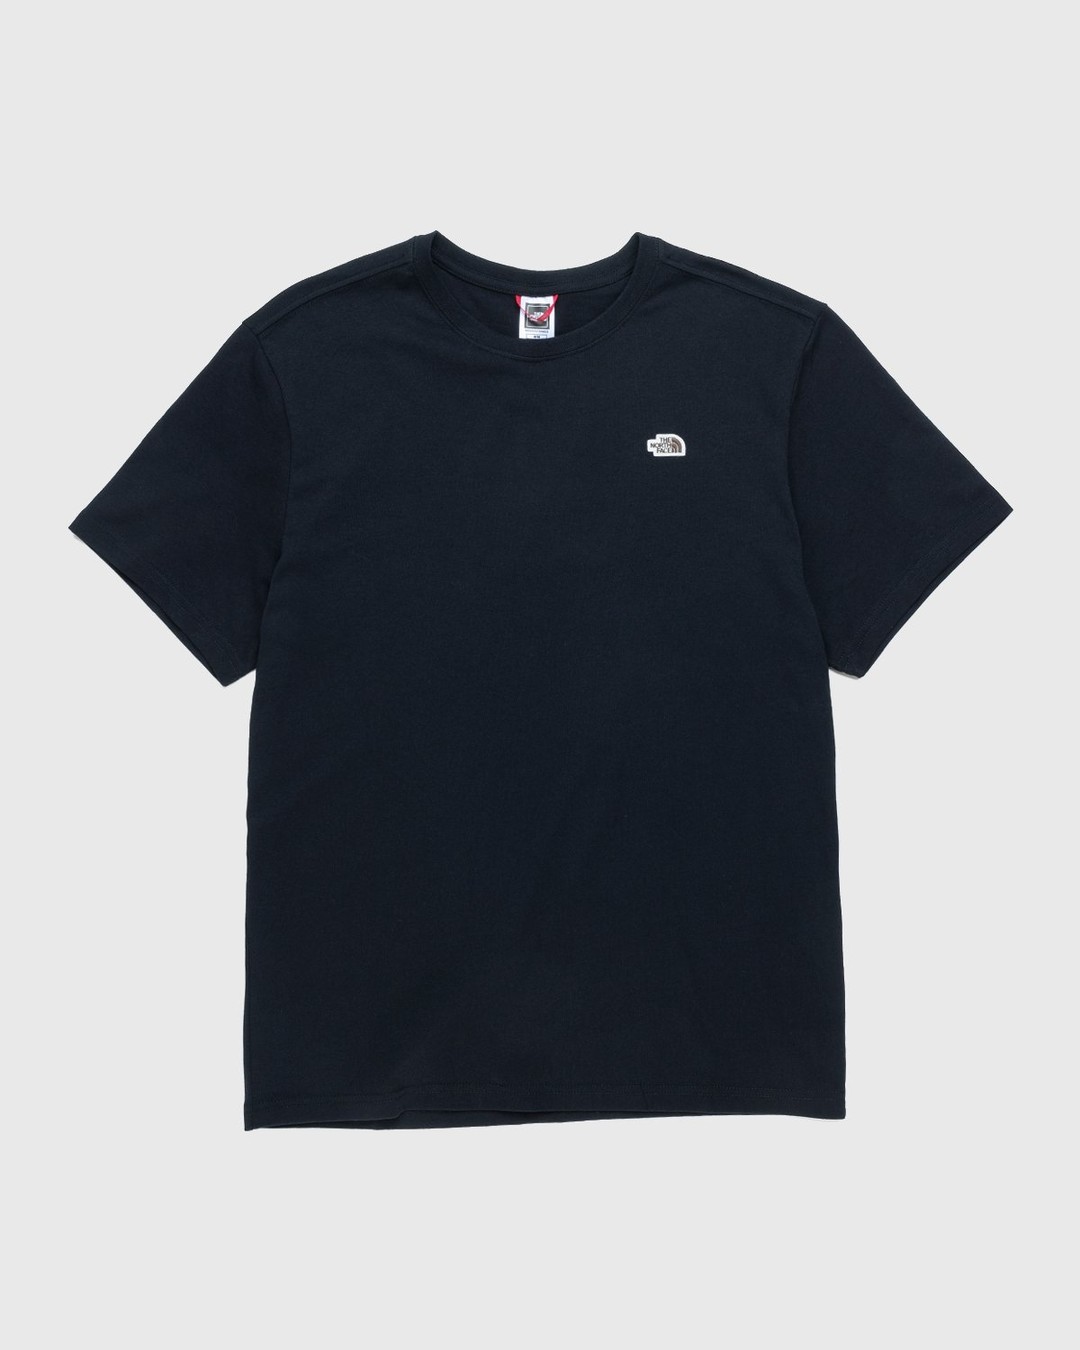 The North Face – Scrap T-Shirt Black - T-Shirts - Black - Image 1